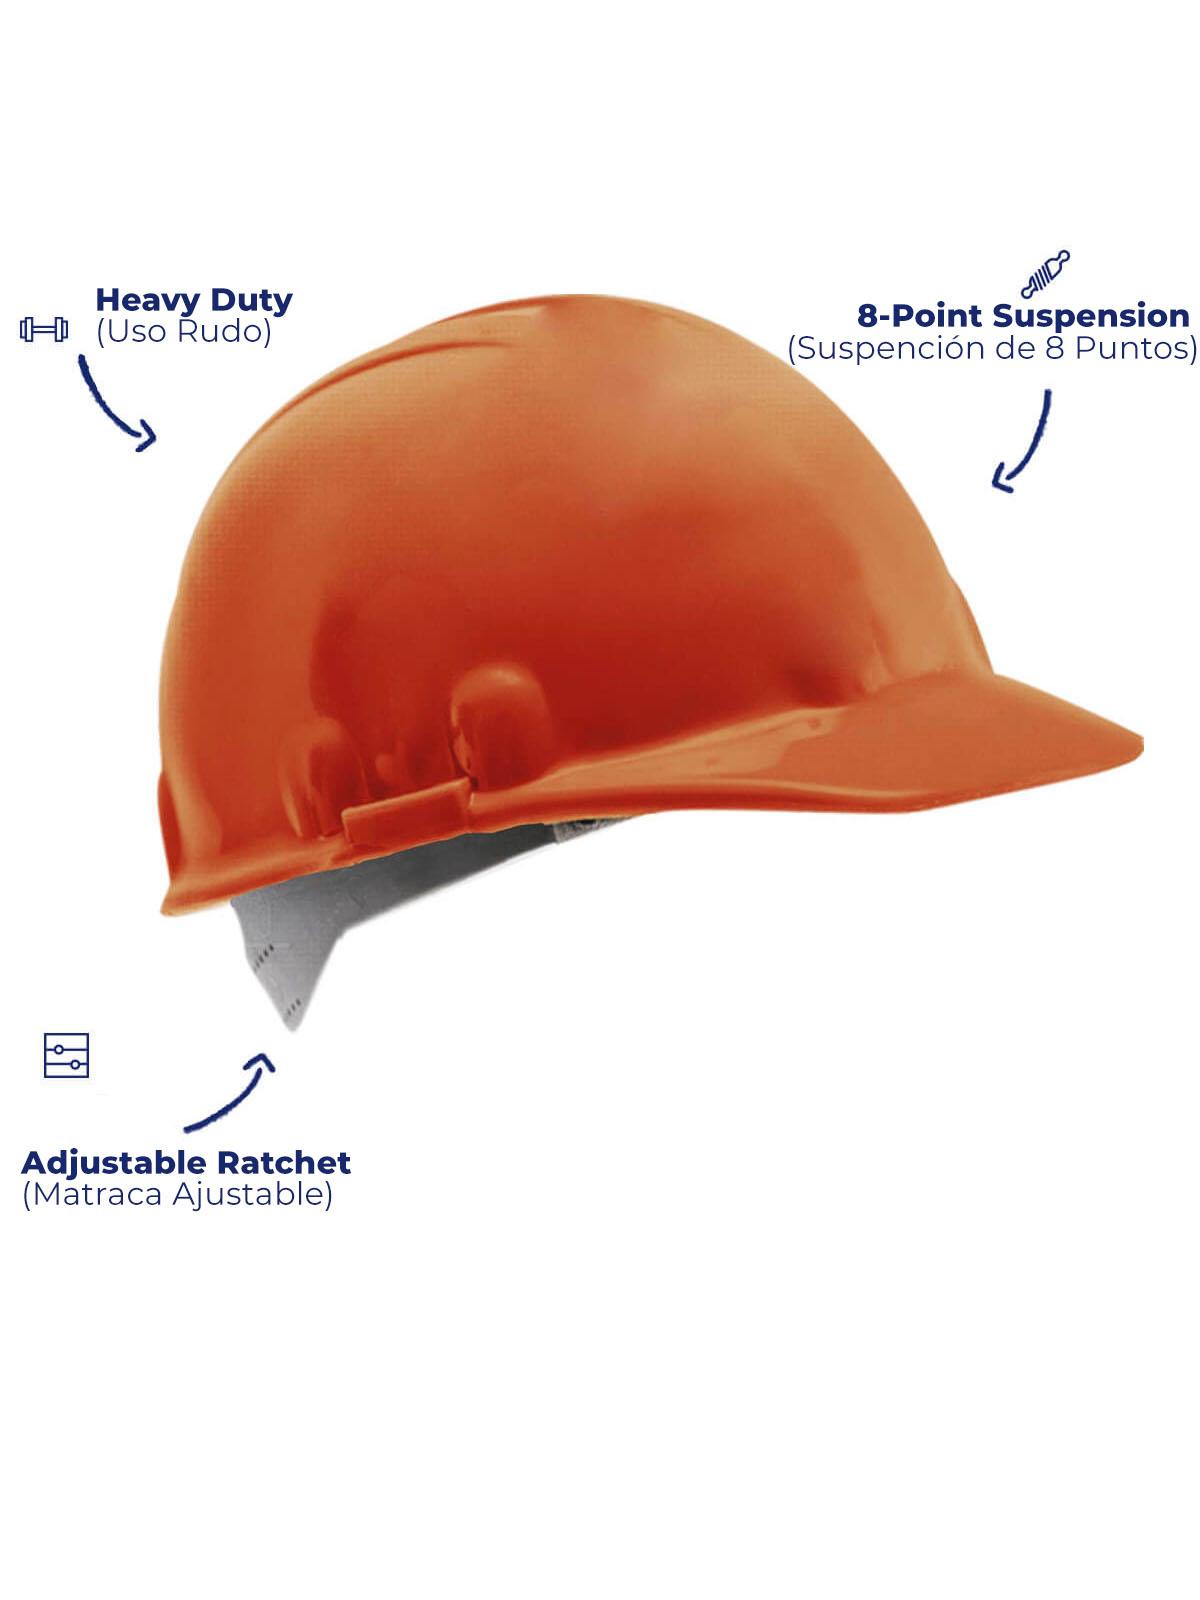 Orange safety helmet for construction